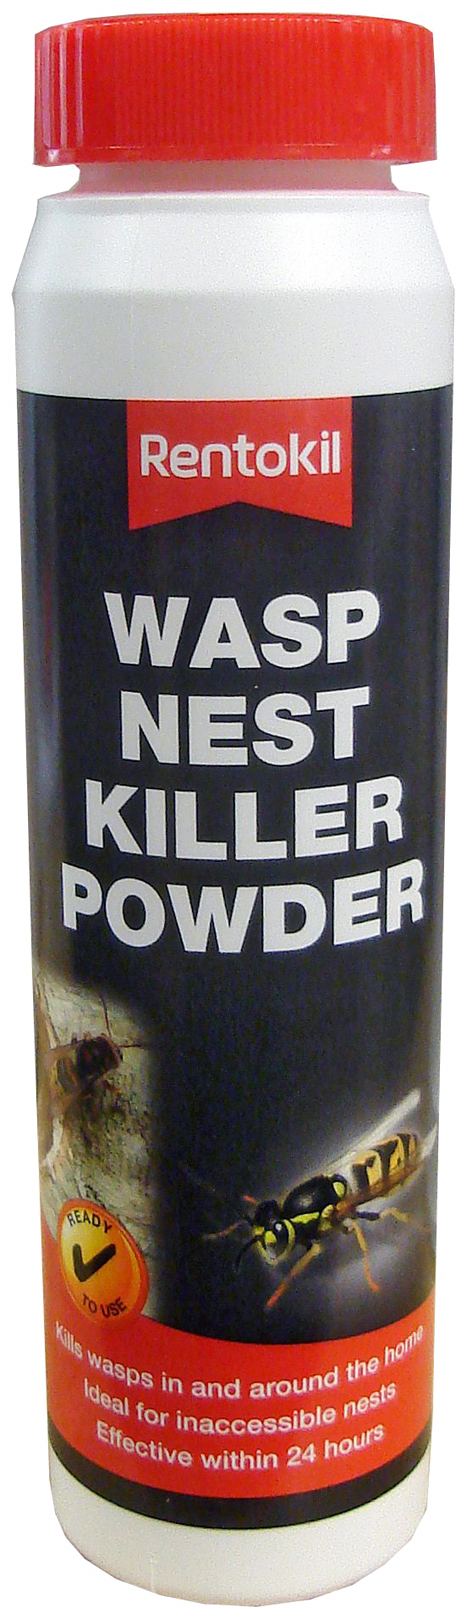 Rentokill Wasp Killer Powder 150g pk of 6